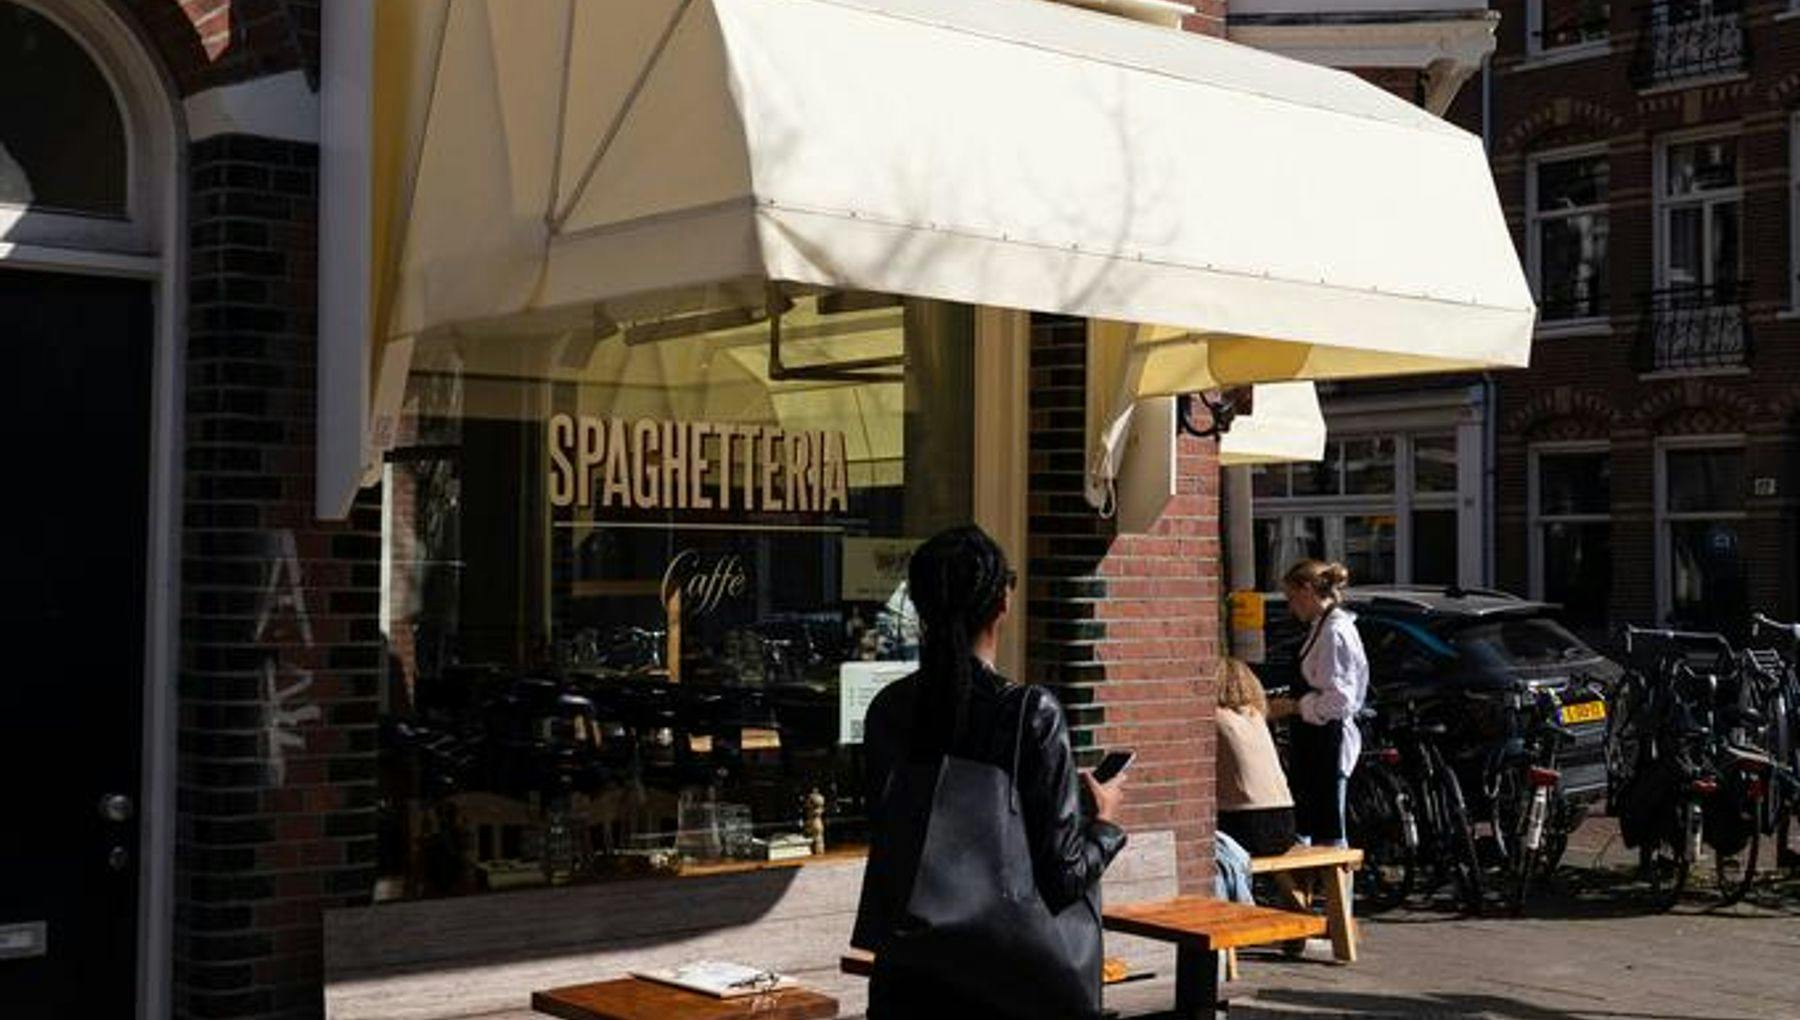 Outside the Spaghetteria Caffè